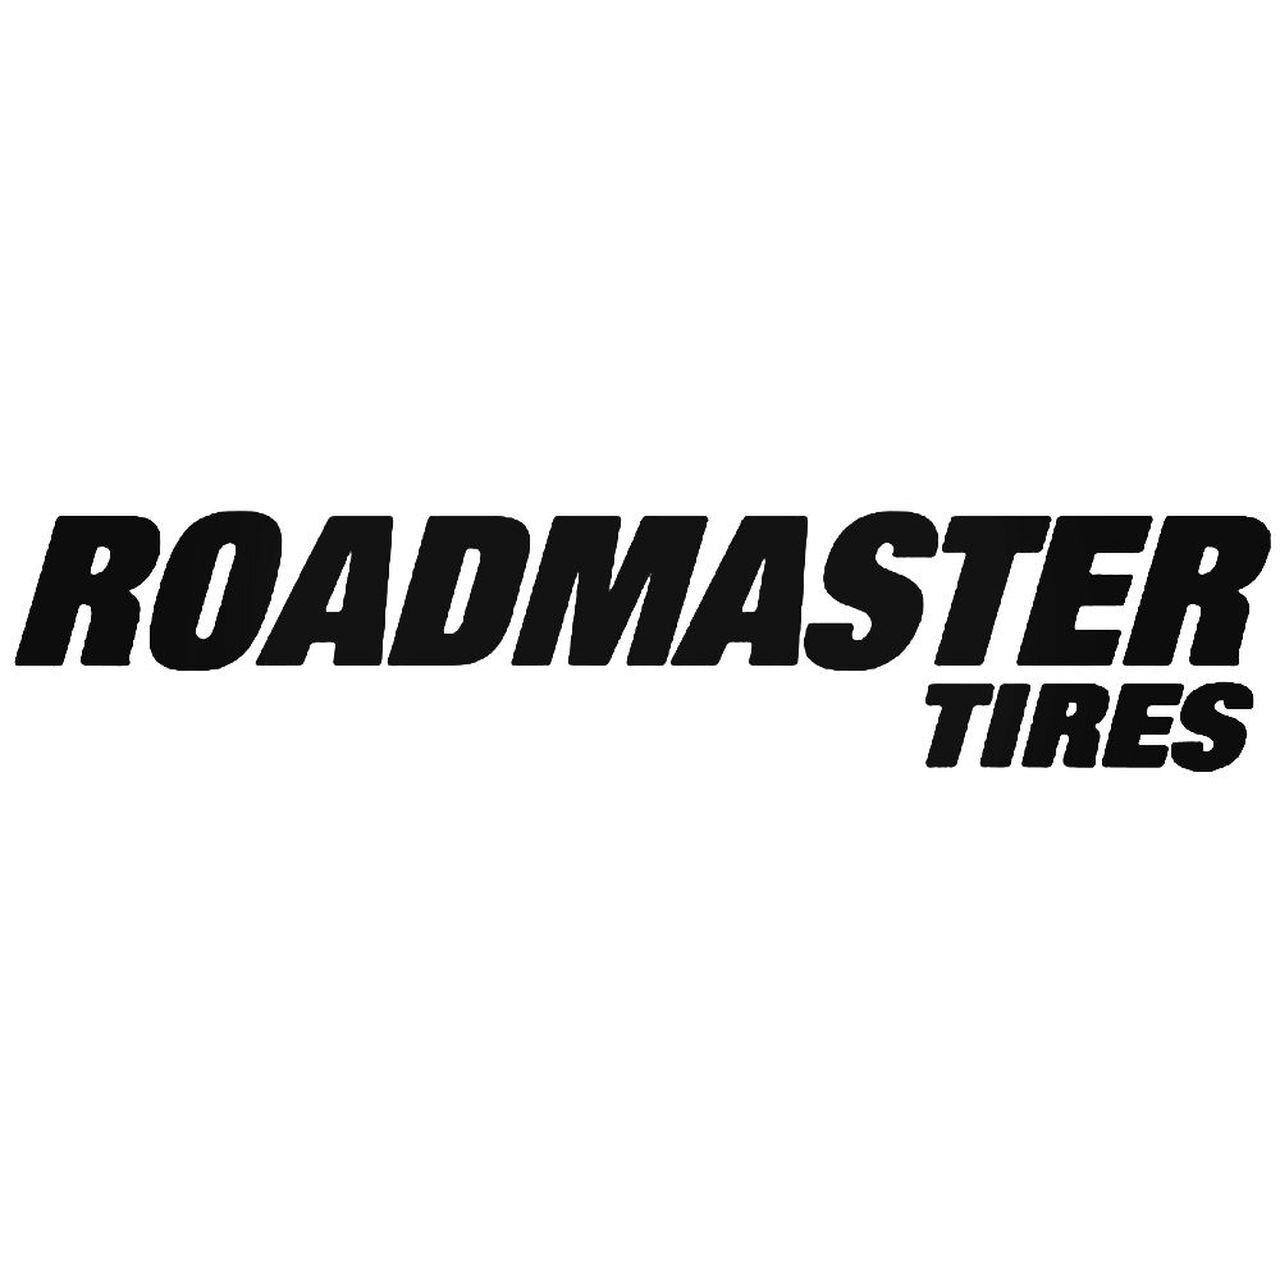 Roadmaster Logo - Roadmaster Tires Vinyl Decal Sticker